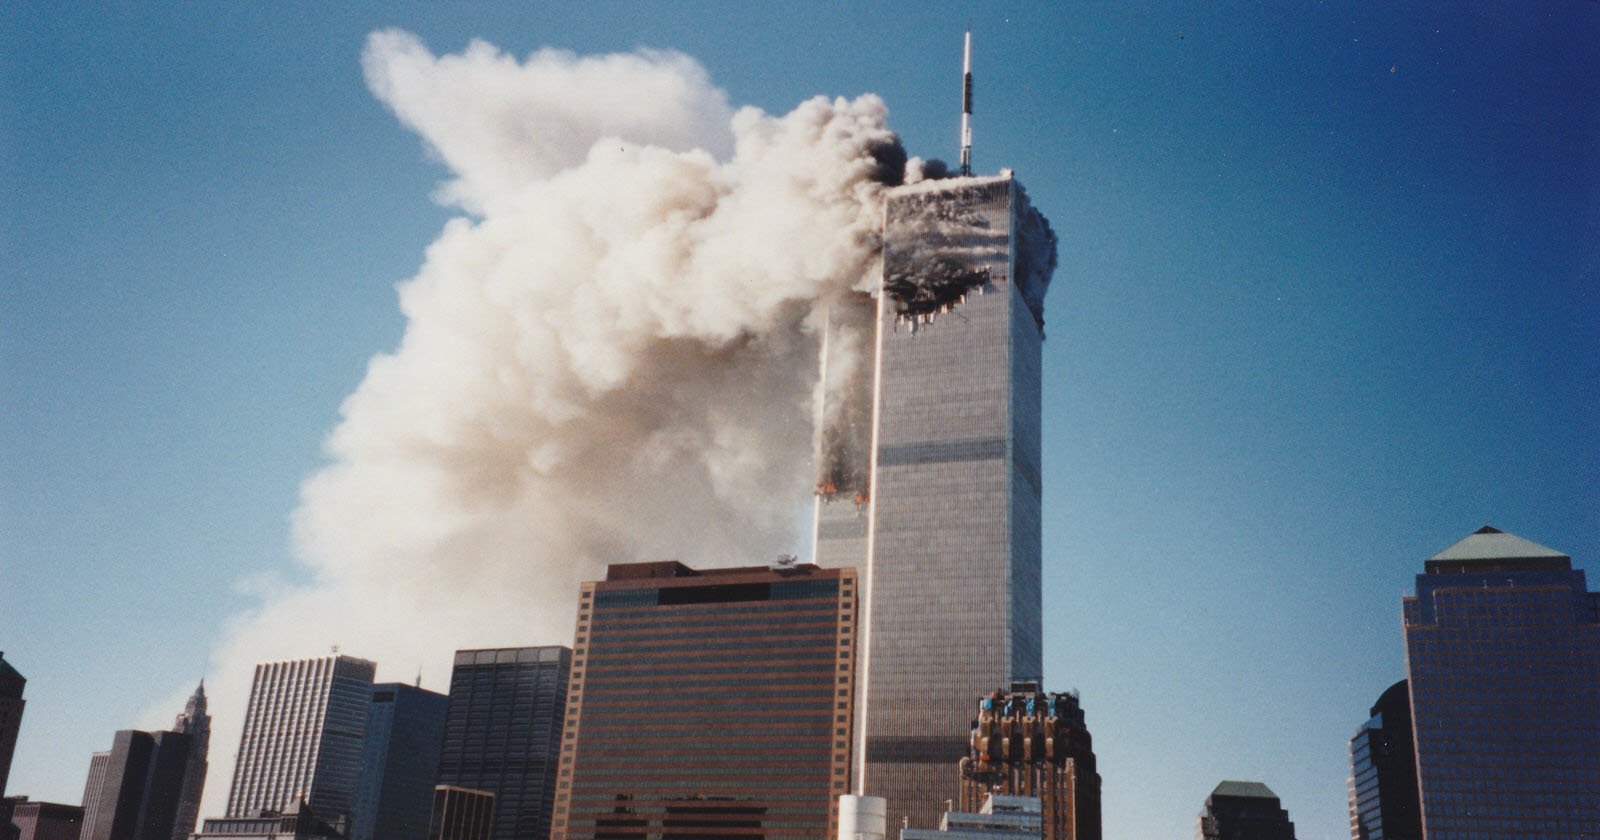 WORLD TRADE CENTER Photo 8x10 Twin Towers Ground Zero Before 911 Memorabilia